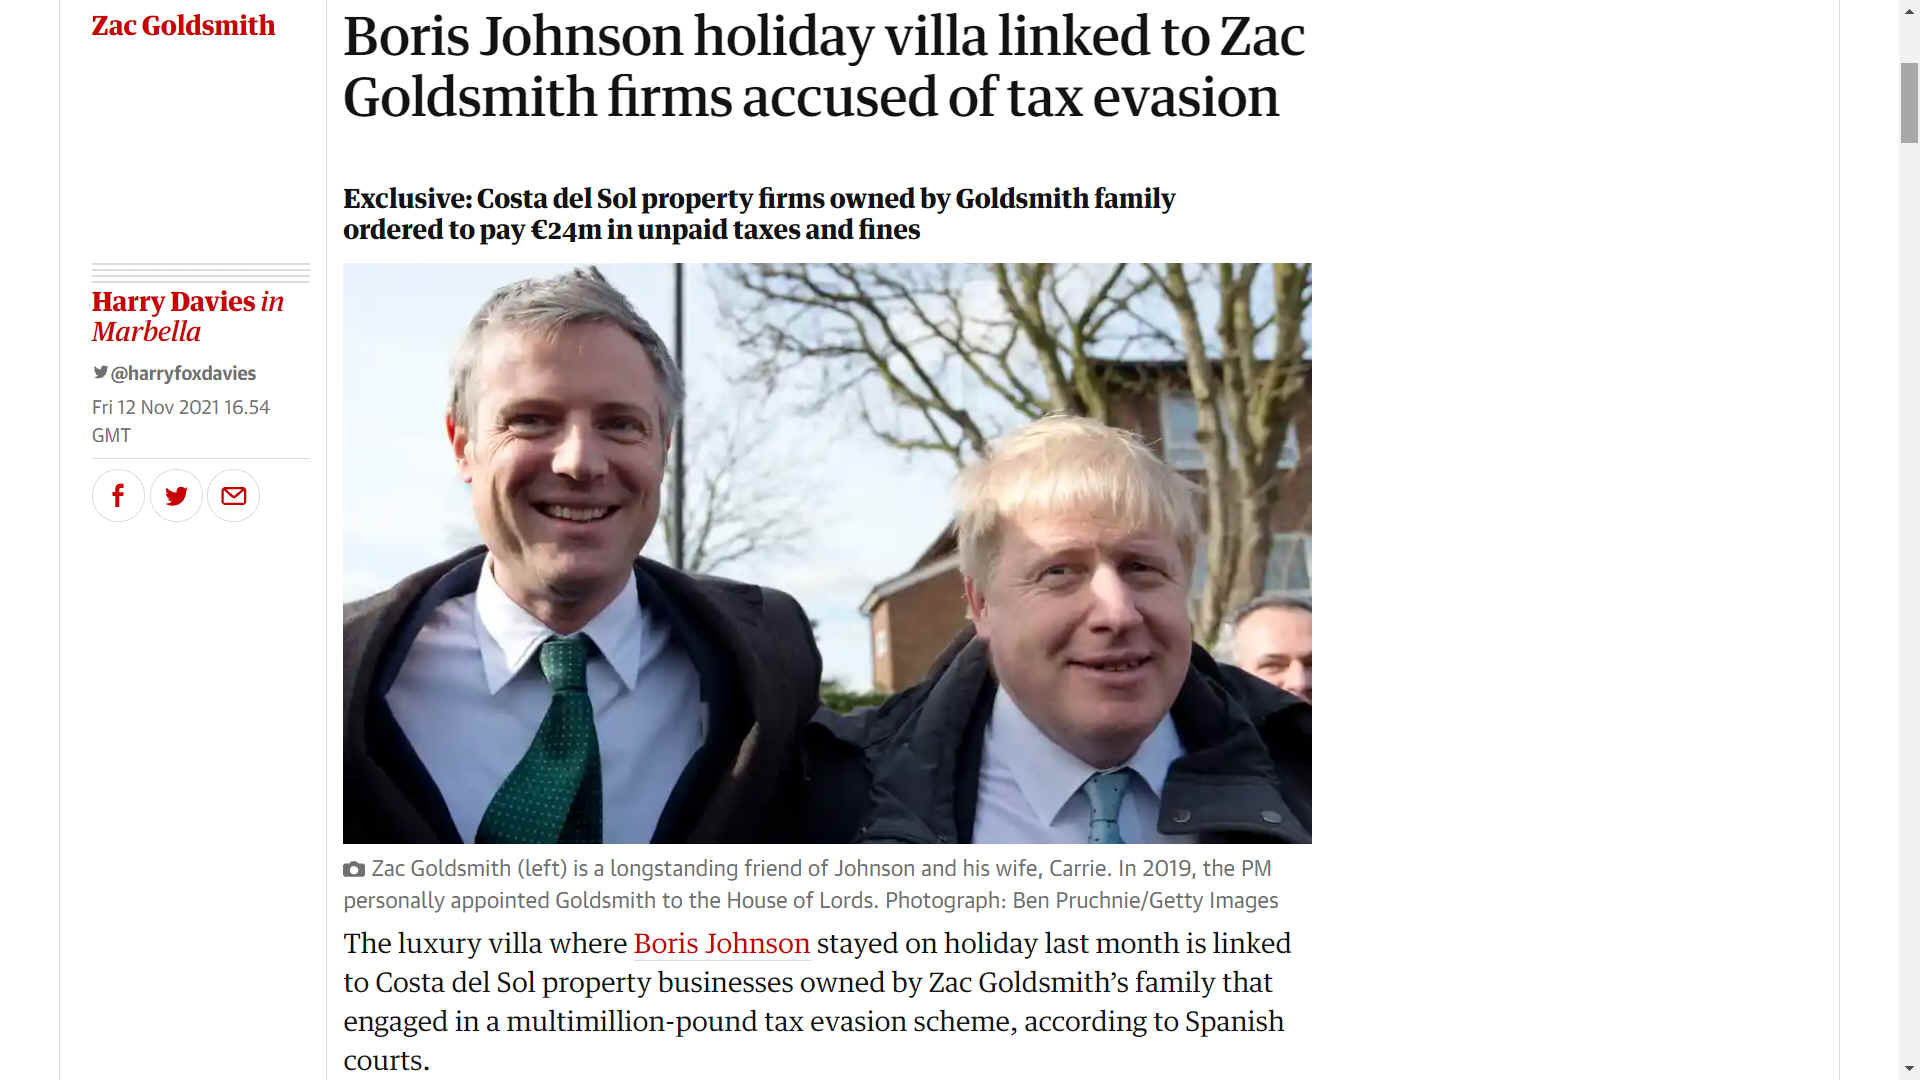 Zac Goldsmith and Boris Johnson, living the high life